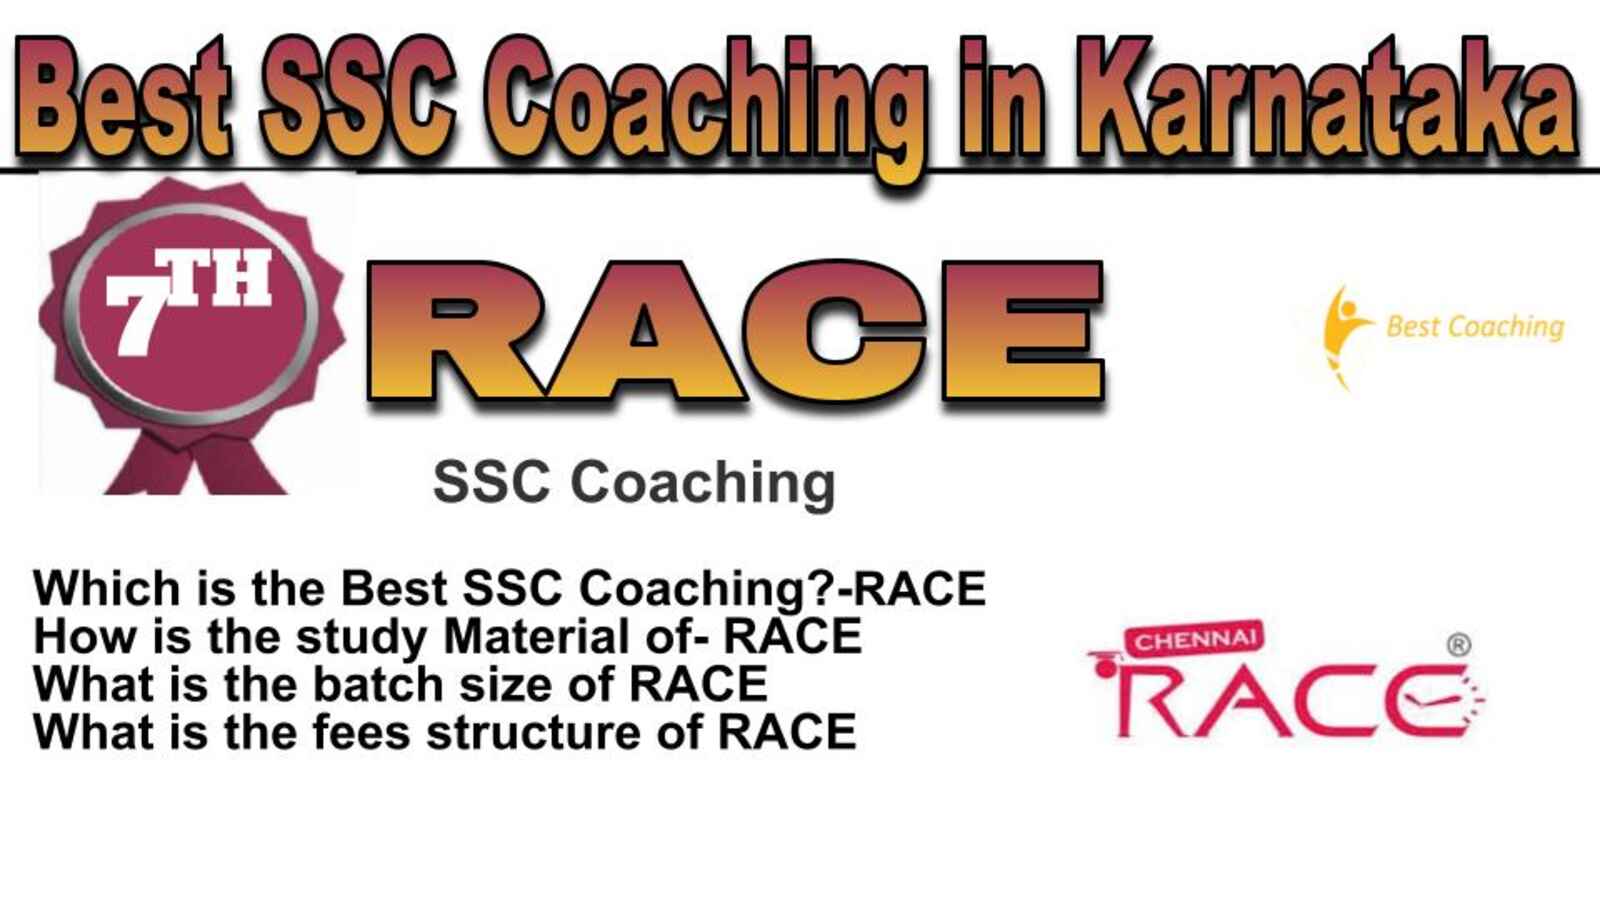 Rank 7 best SSC coaching in Karnataka